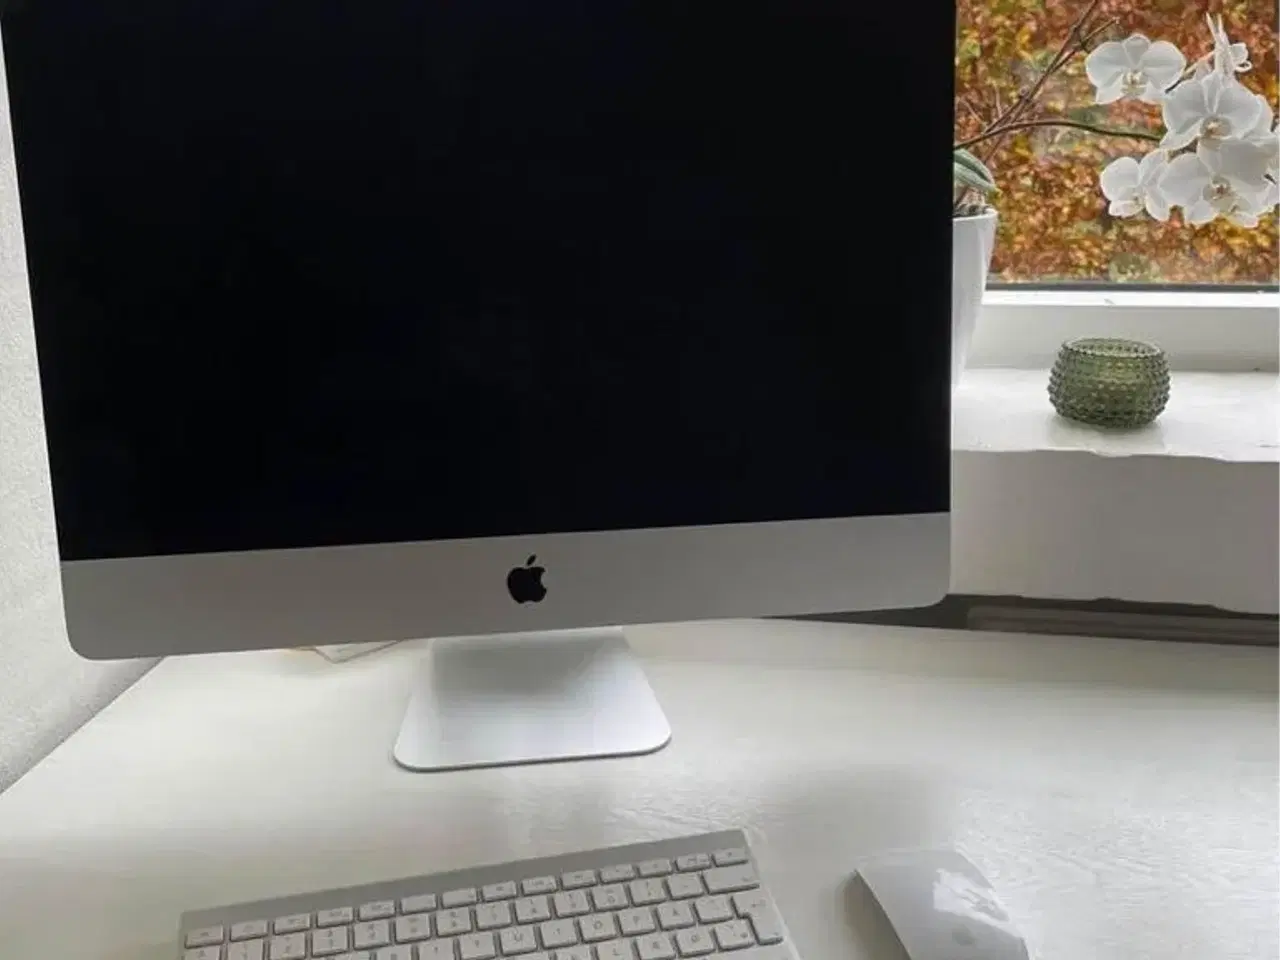 Billede 2 - iMac computer